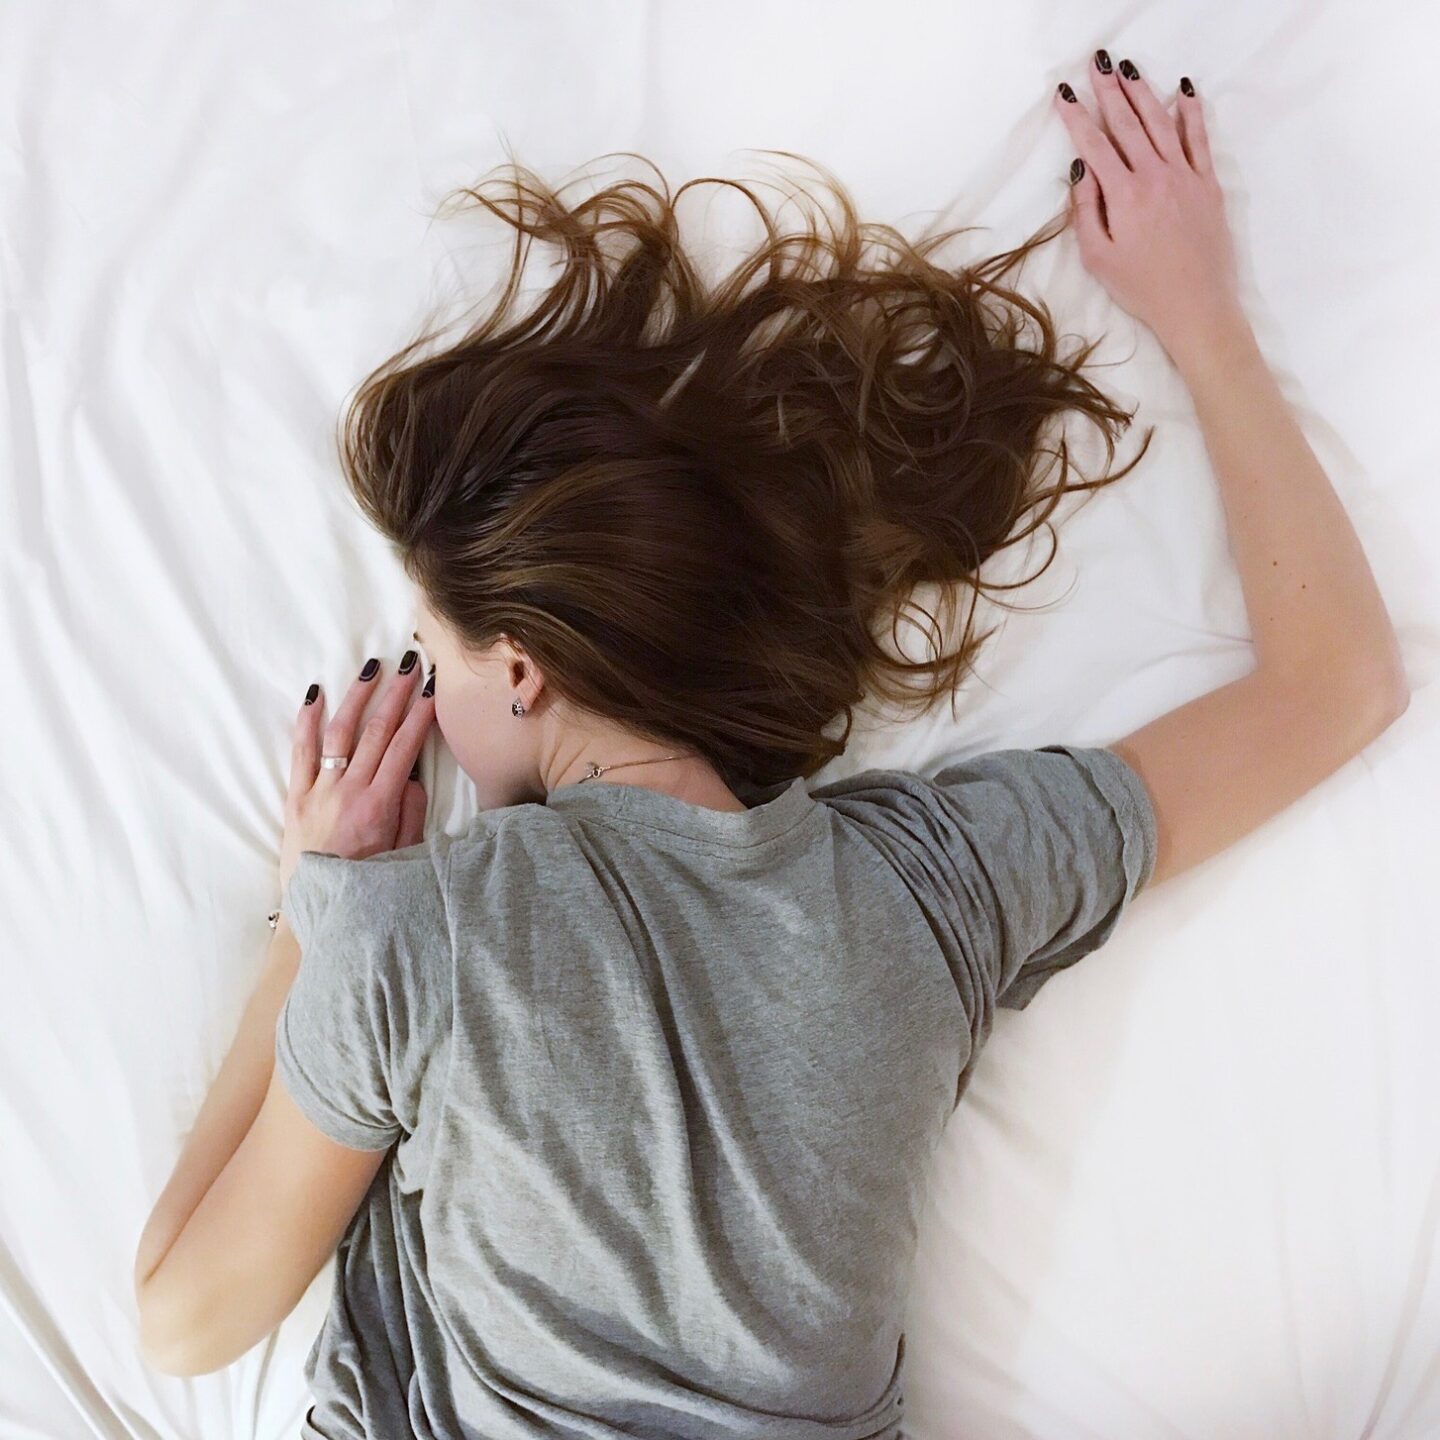 A woman lying facedown on a white sheet asleep